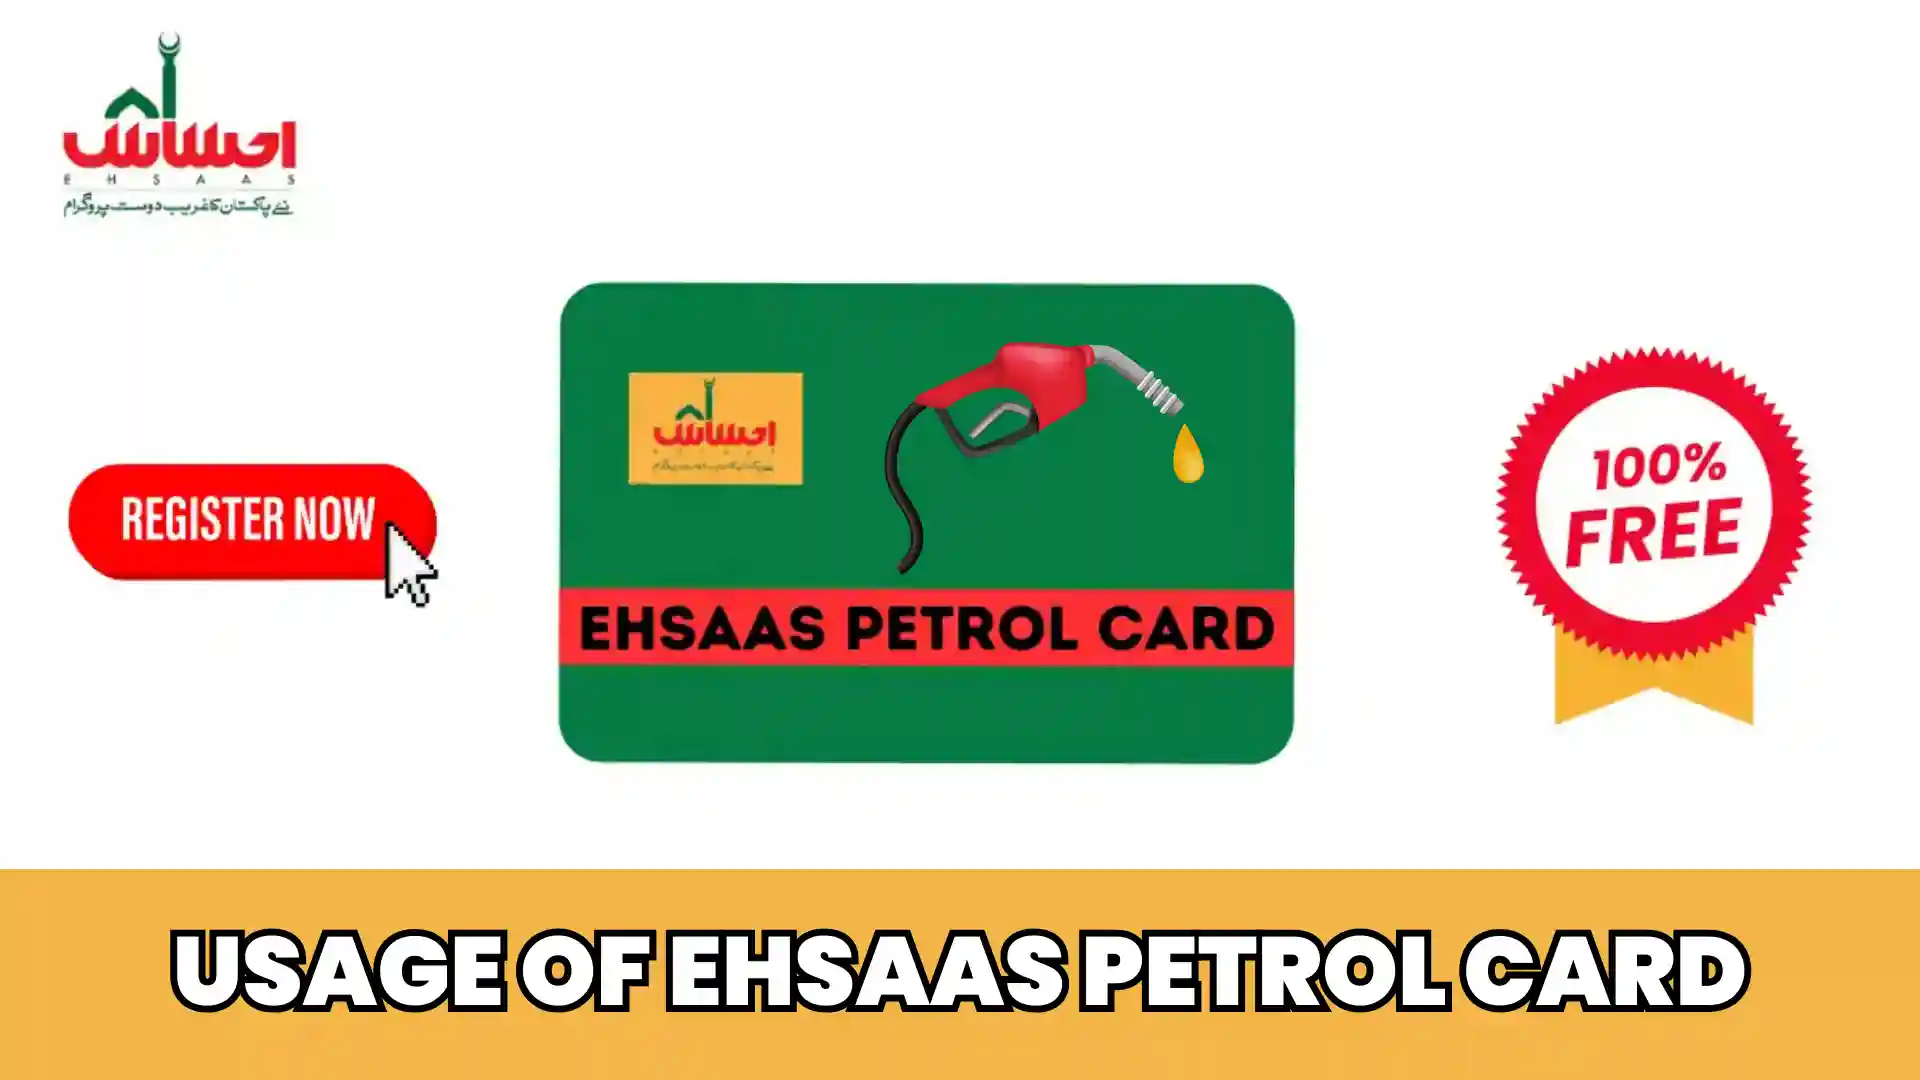 Usage of Ehsaas Petrol Card